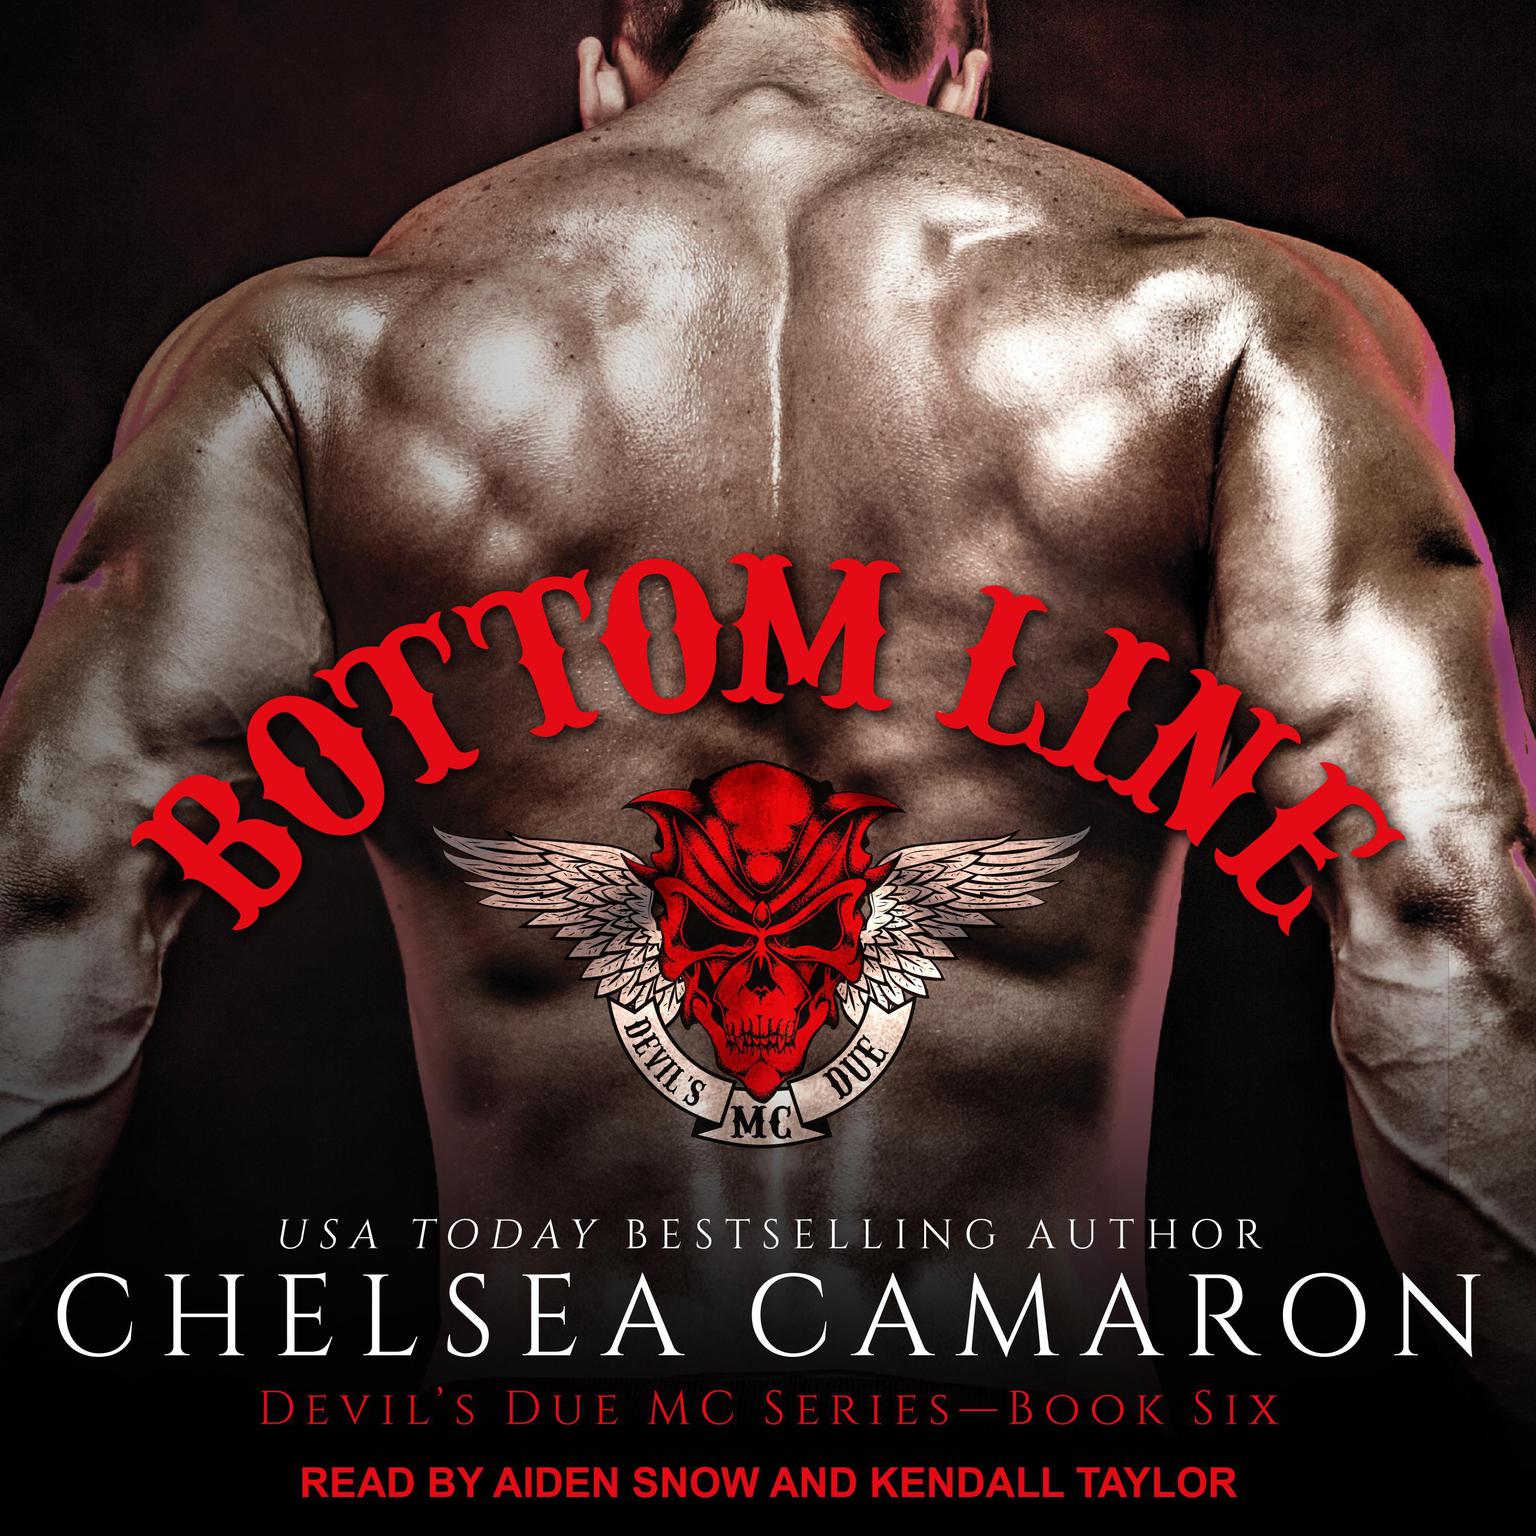 Bottom Line Audiobook, by Chelsea Camaron